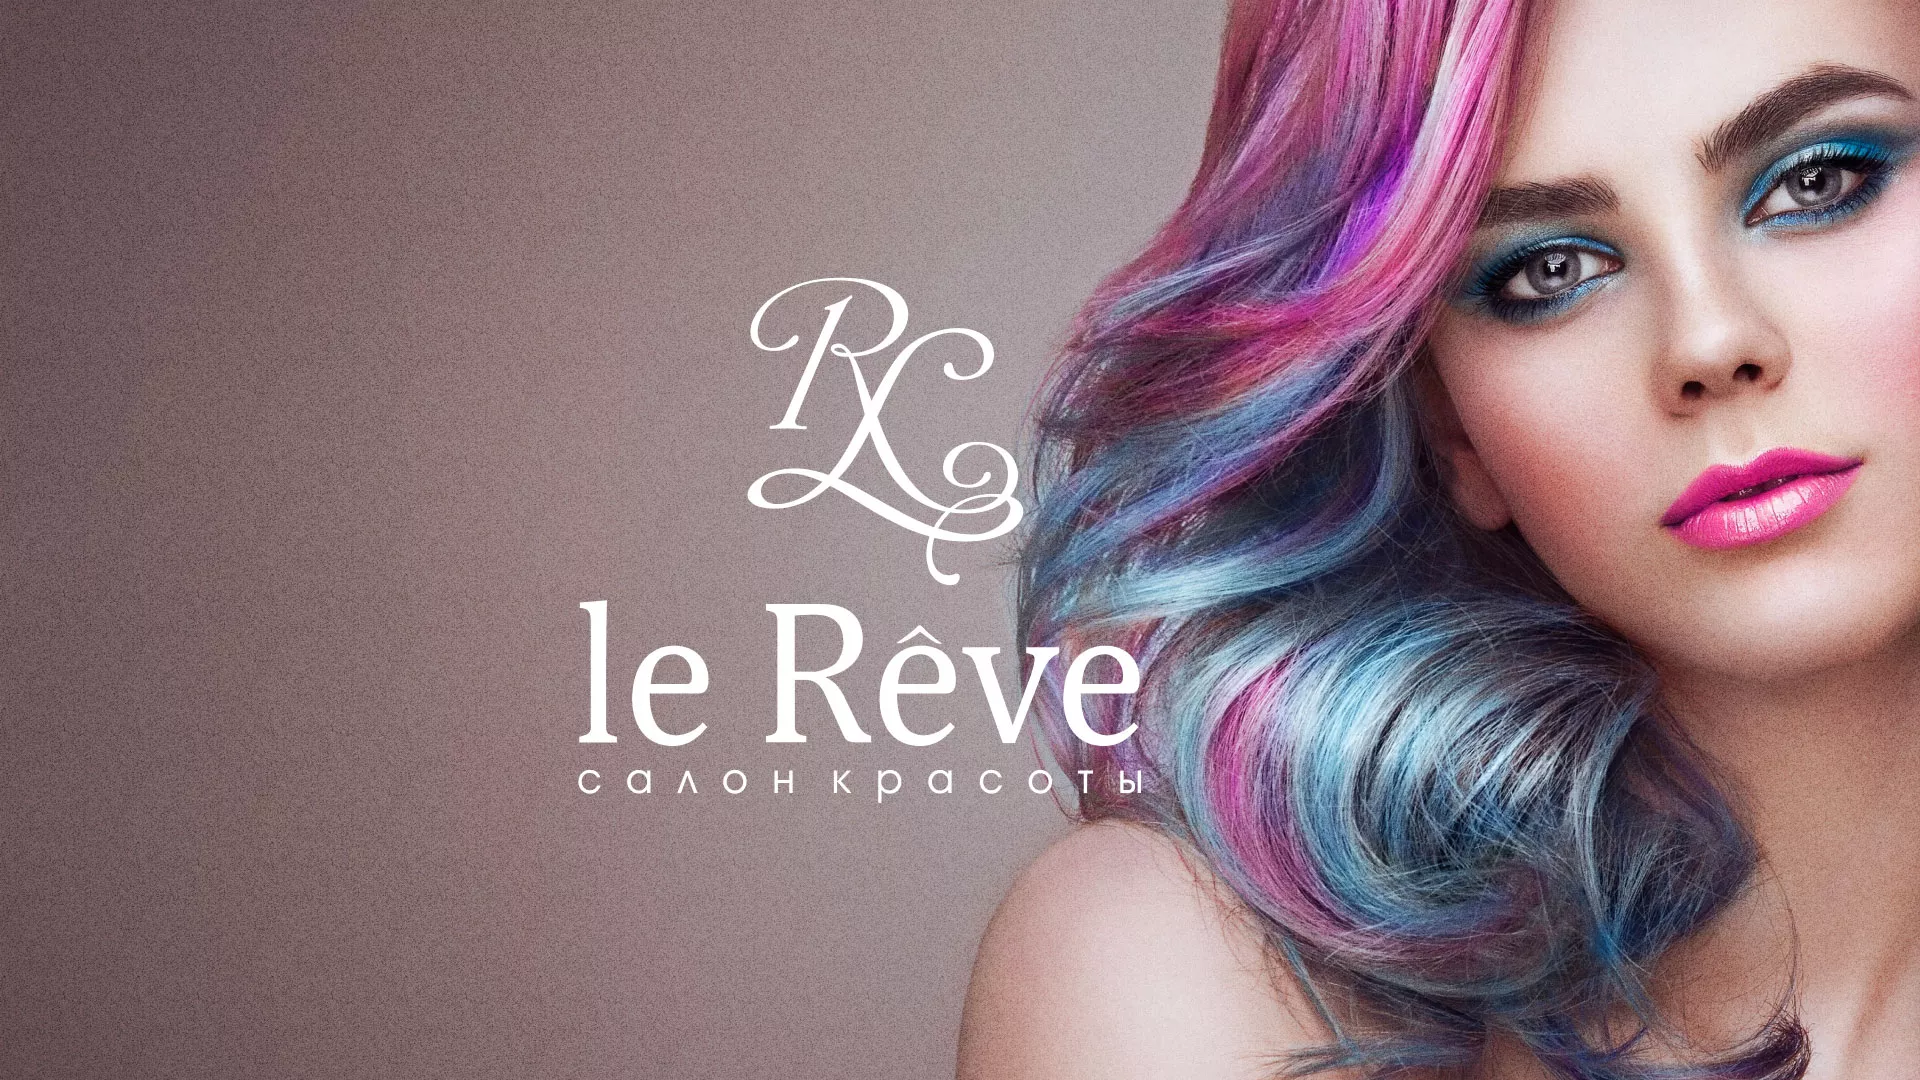 Создание сайта для салона красоты «Le Reve» в Шахтёрске